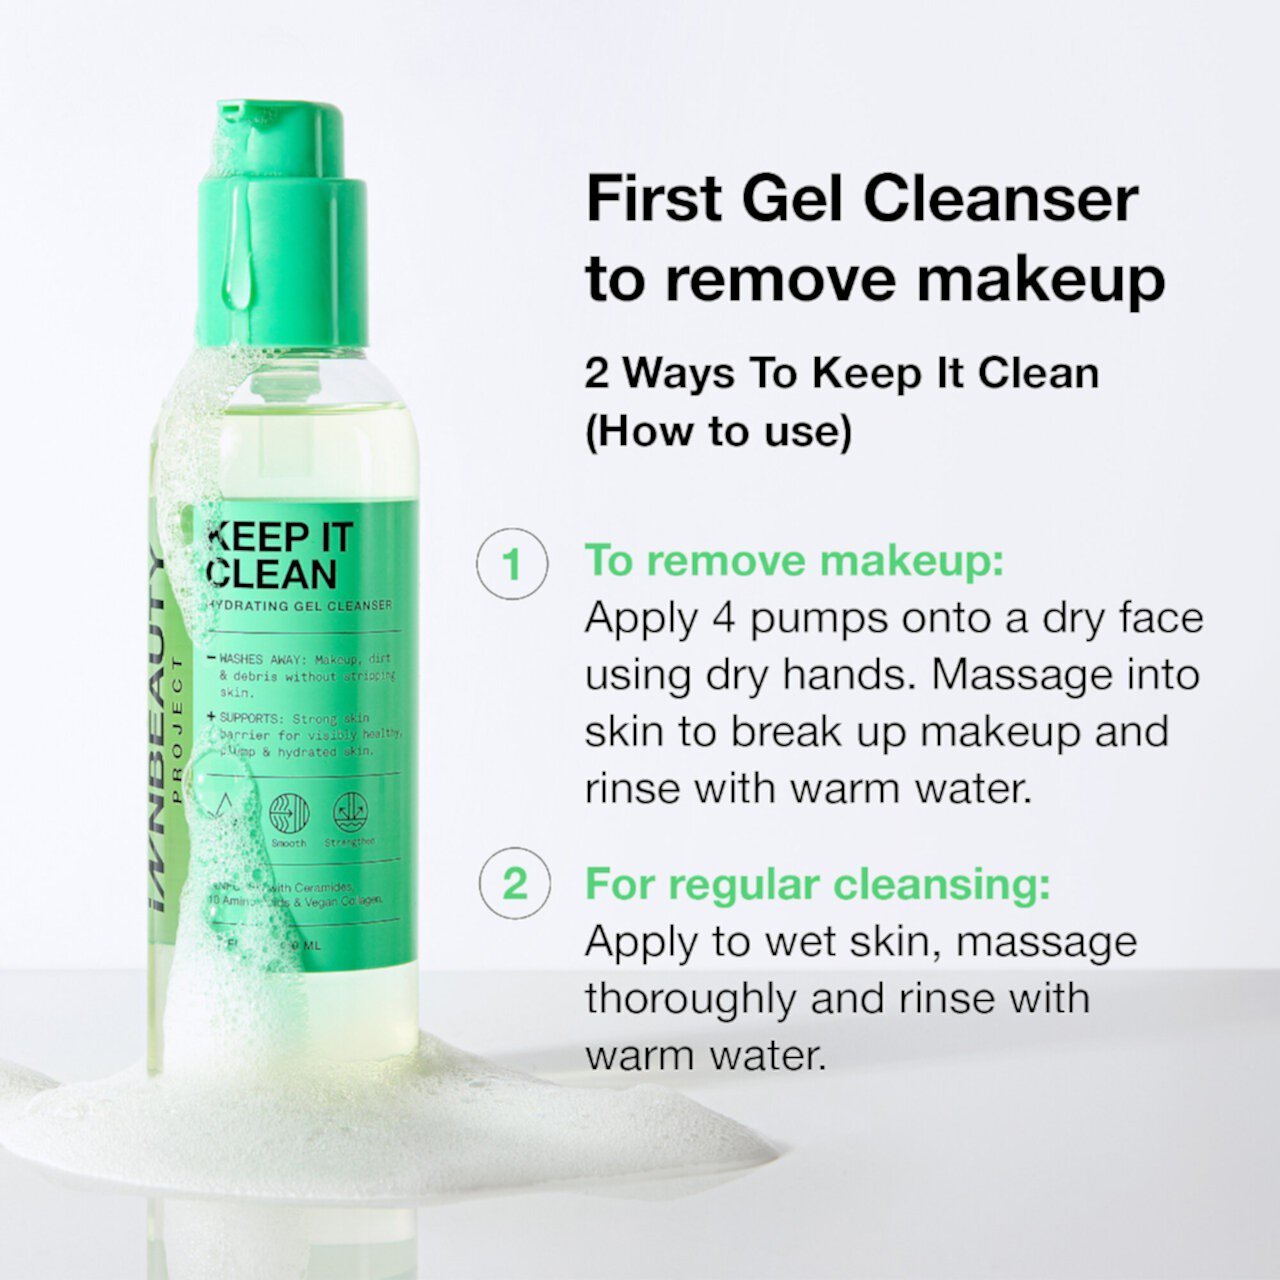 Keep It Clean Увлажняющий очищающий гель с керамидами и 10 аминокислотами INNBEAUTY PROJECT